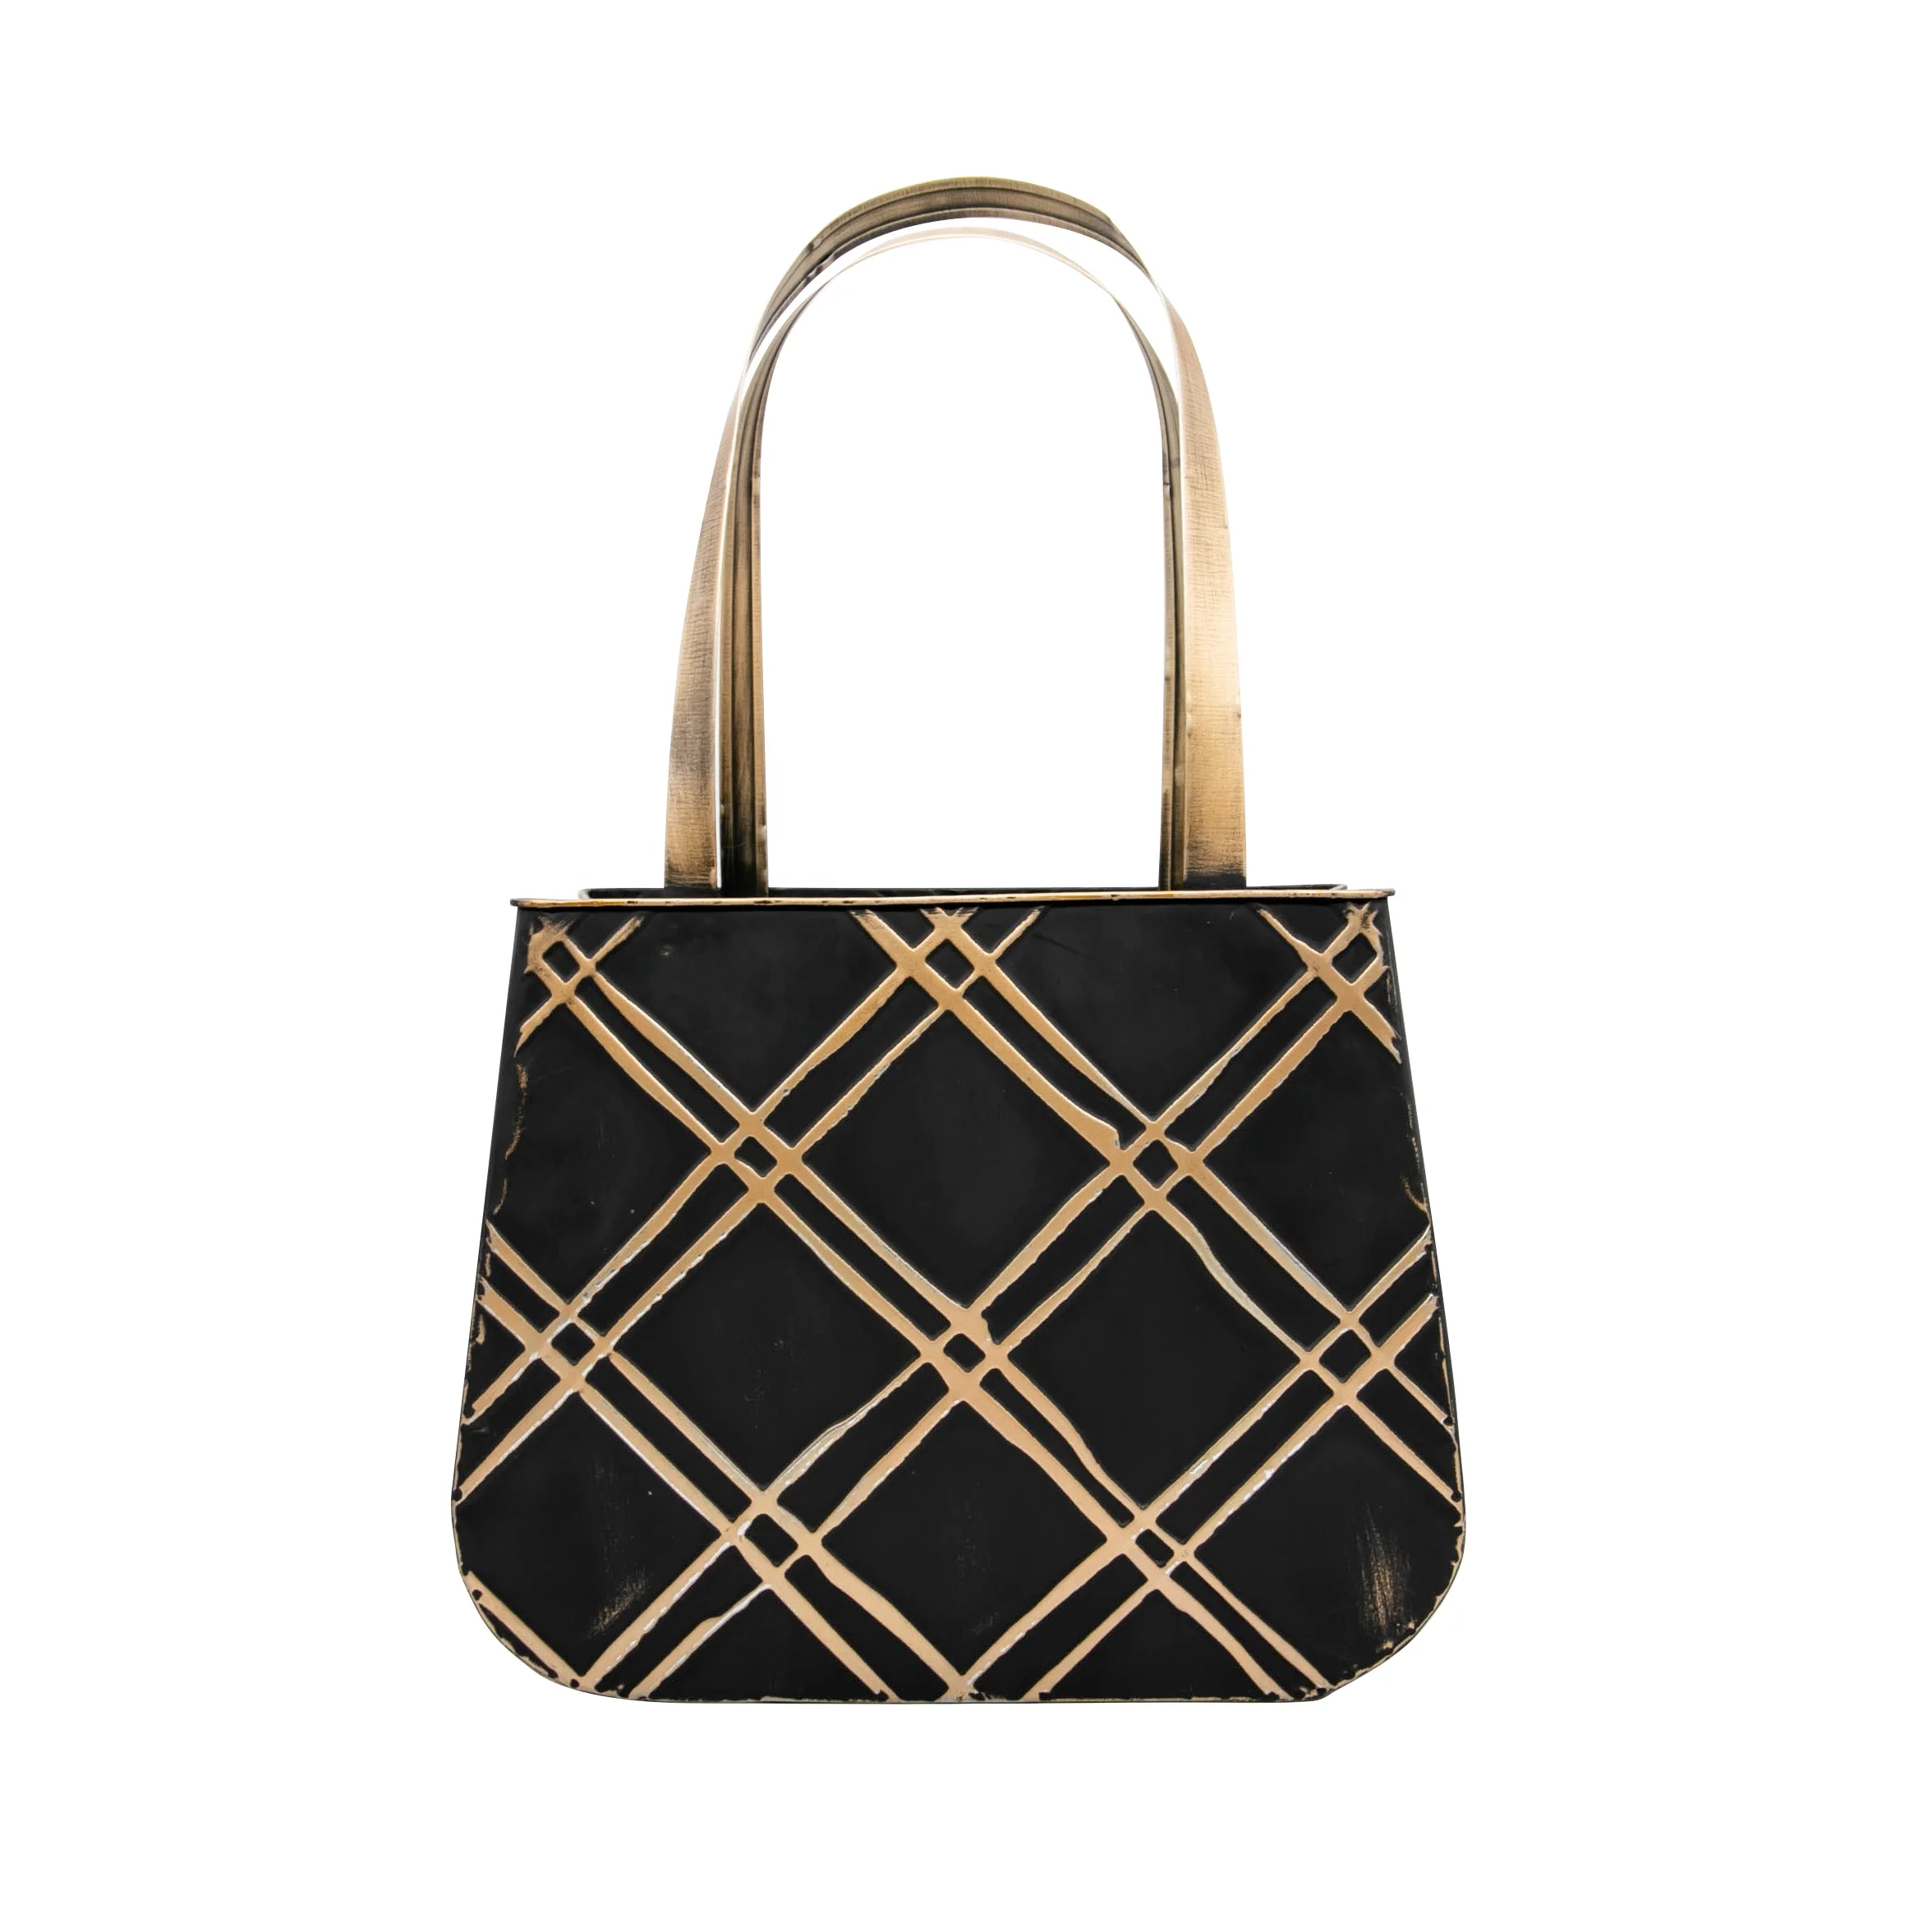 2021 New Metal Chic Handbag Black Golden Geometric Pattern Tote Bag French Vintage Purse Home Decor Innovative Shopping Bag